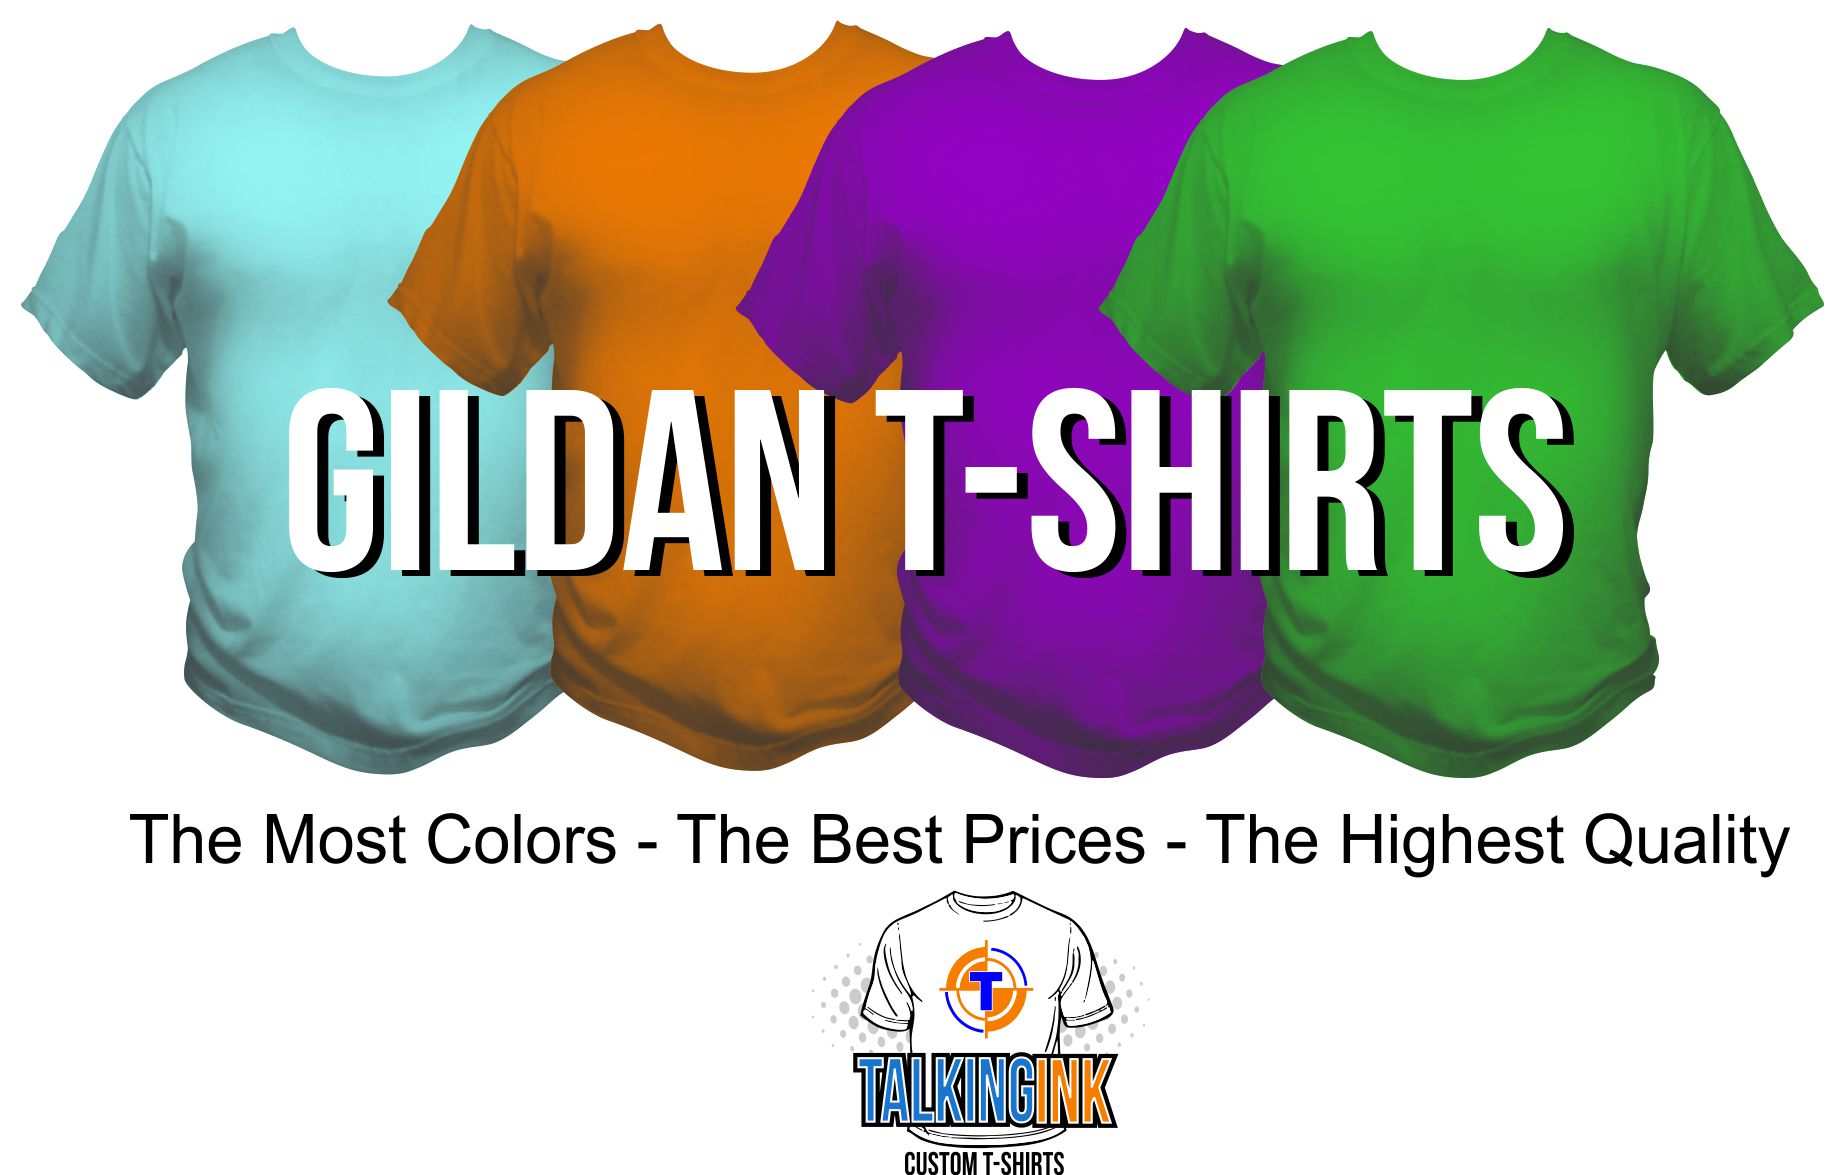 Custom printed Gildan T-shirts